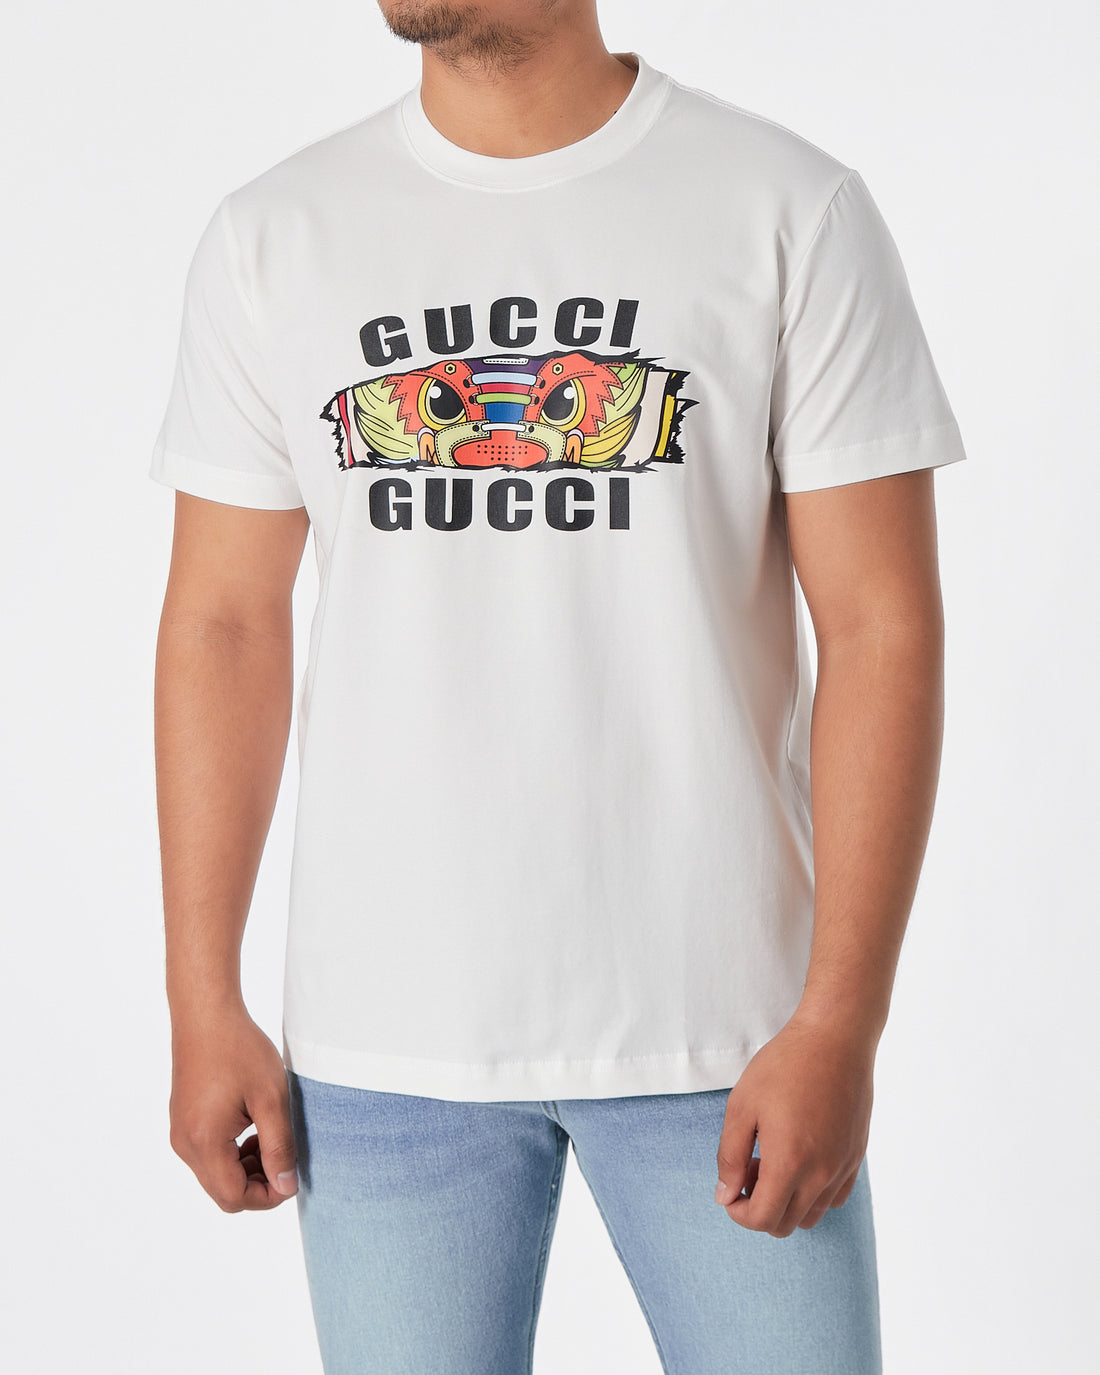 GUC Dragon Printed Men White T-Shirt 16.90